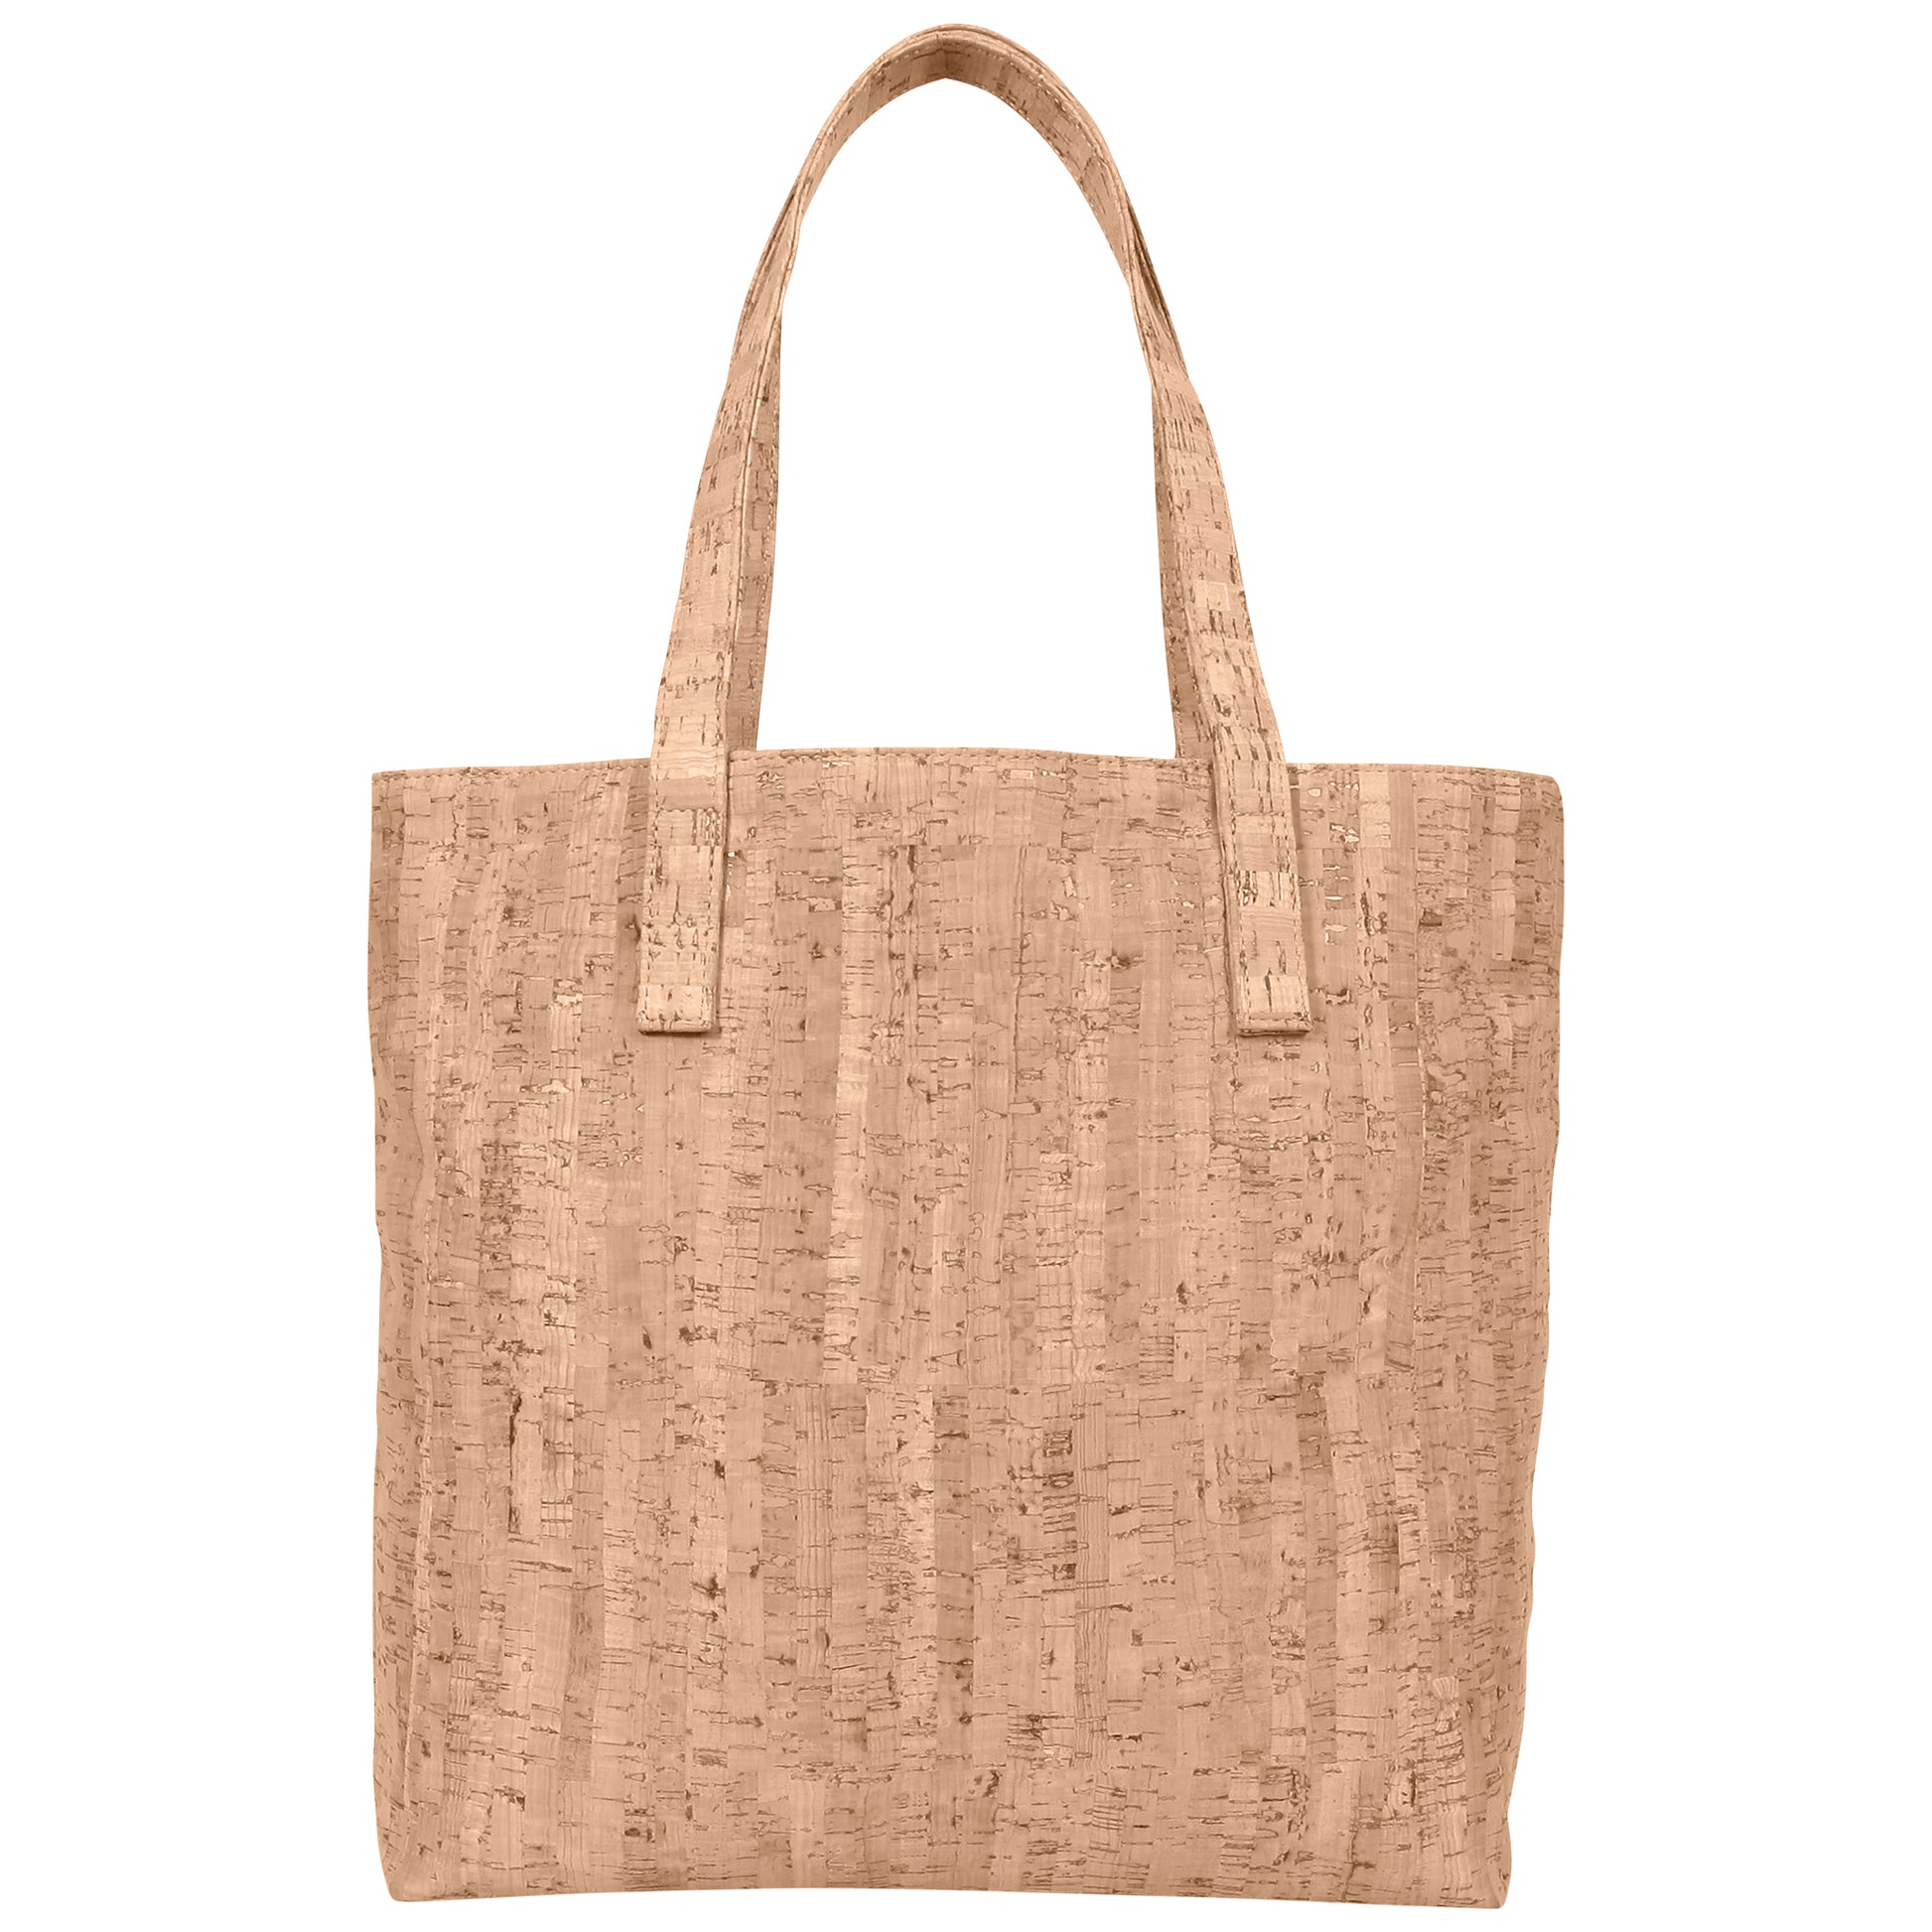 Orenda India Sand Bag Cork-small - VeganMall